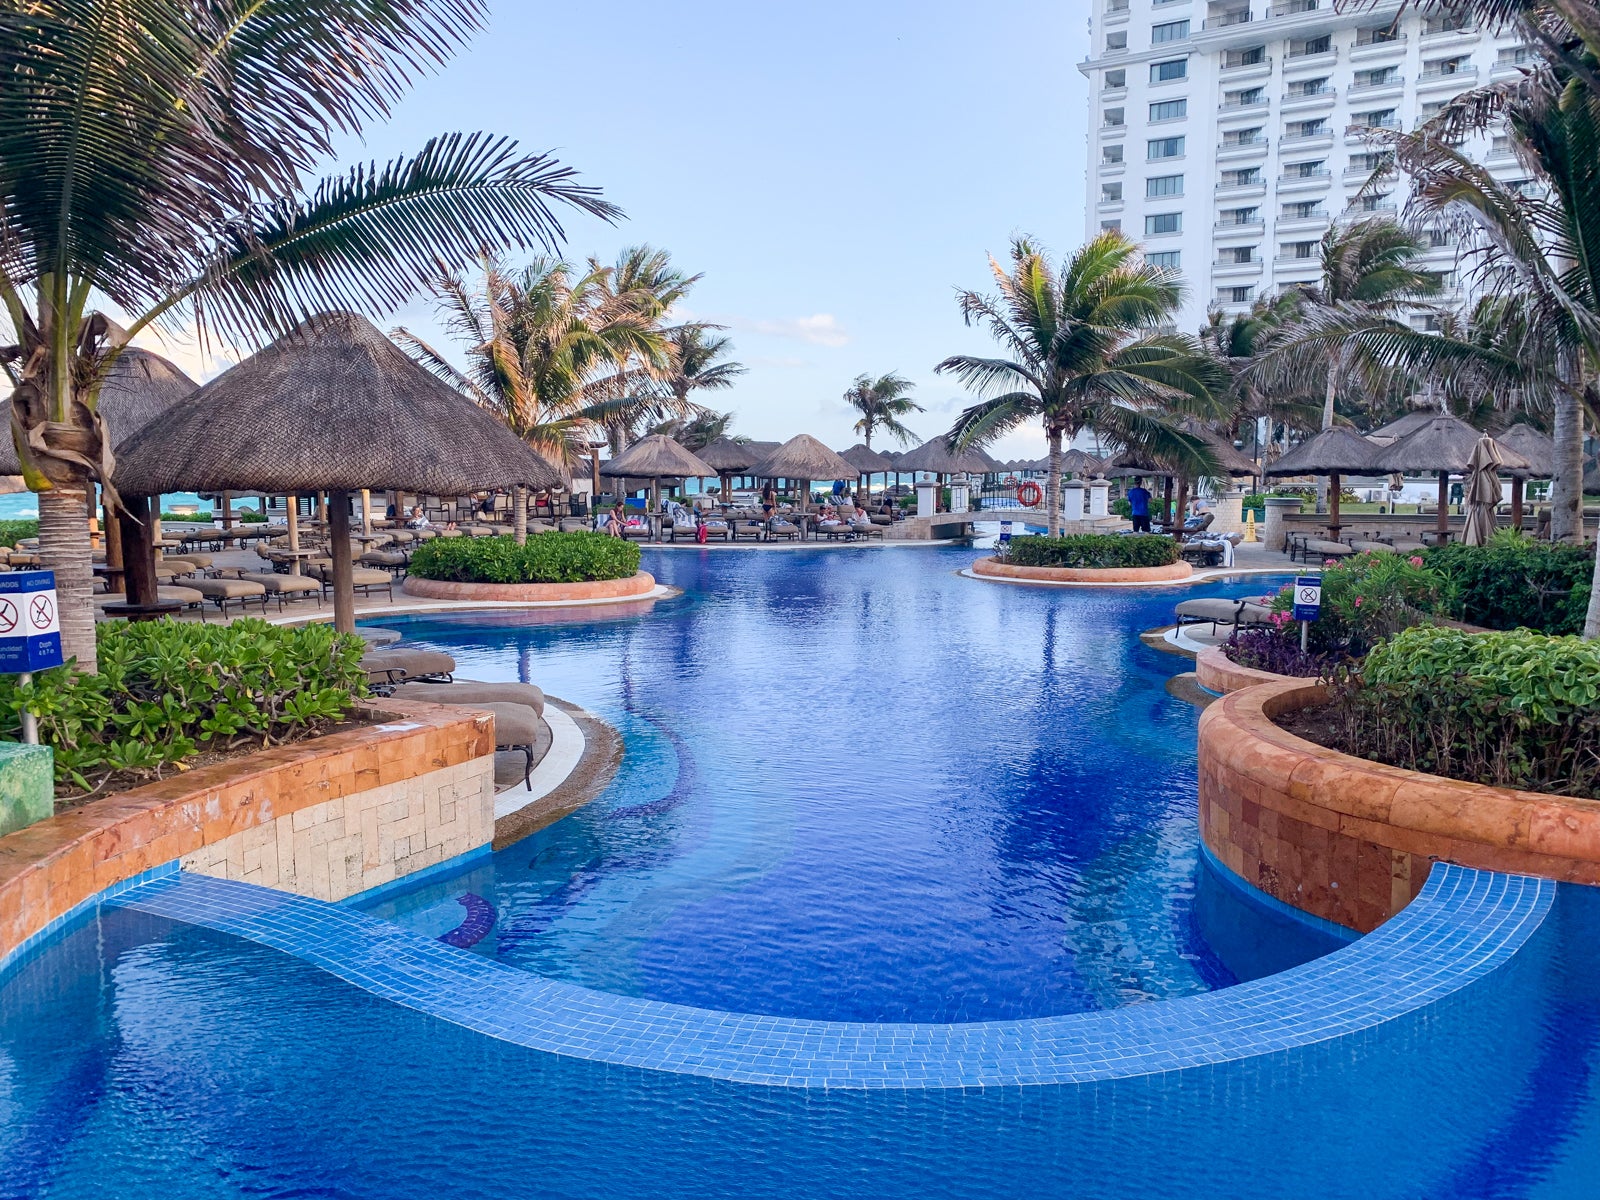 JW Marriott Cancun Resort and Spa, Mexico, Cancun, Cancun